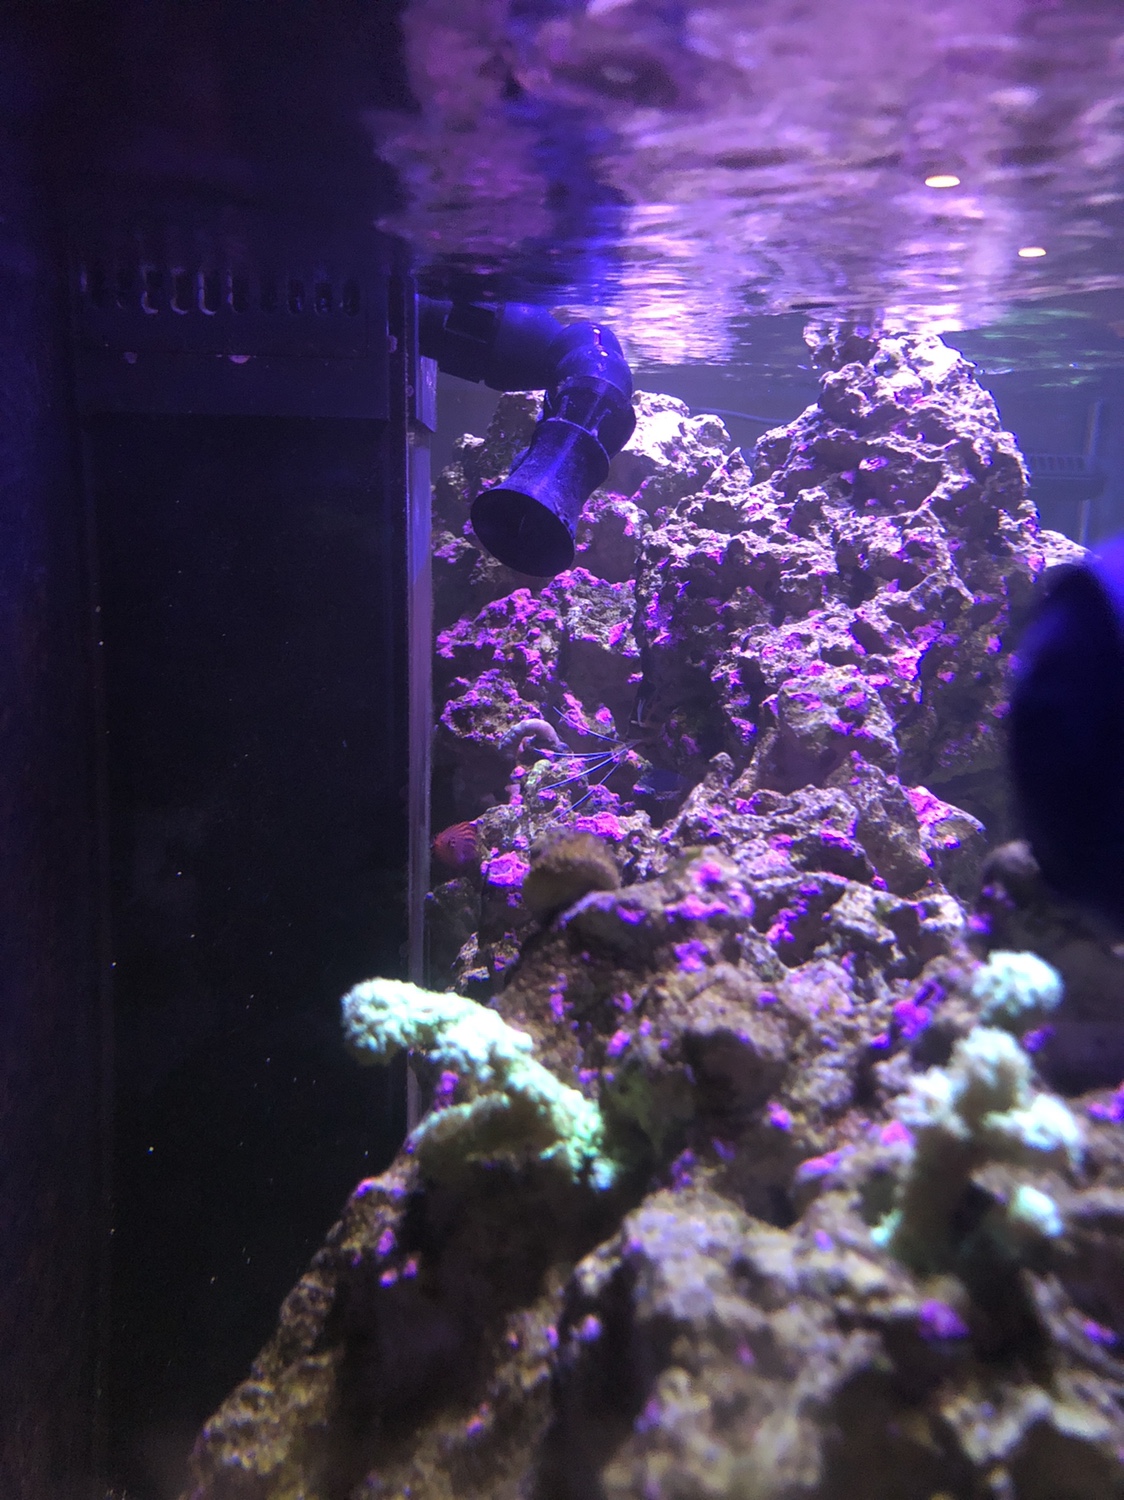 Purple Helix - Live Purple Coralline Algae in a Bottle (8 oz) - ARCReef 